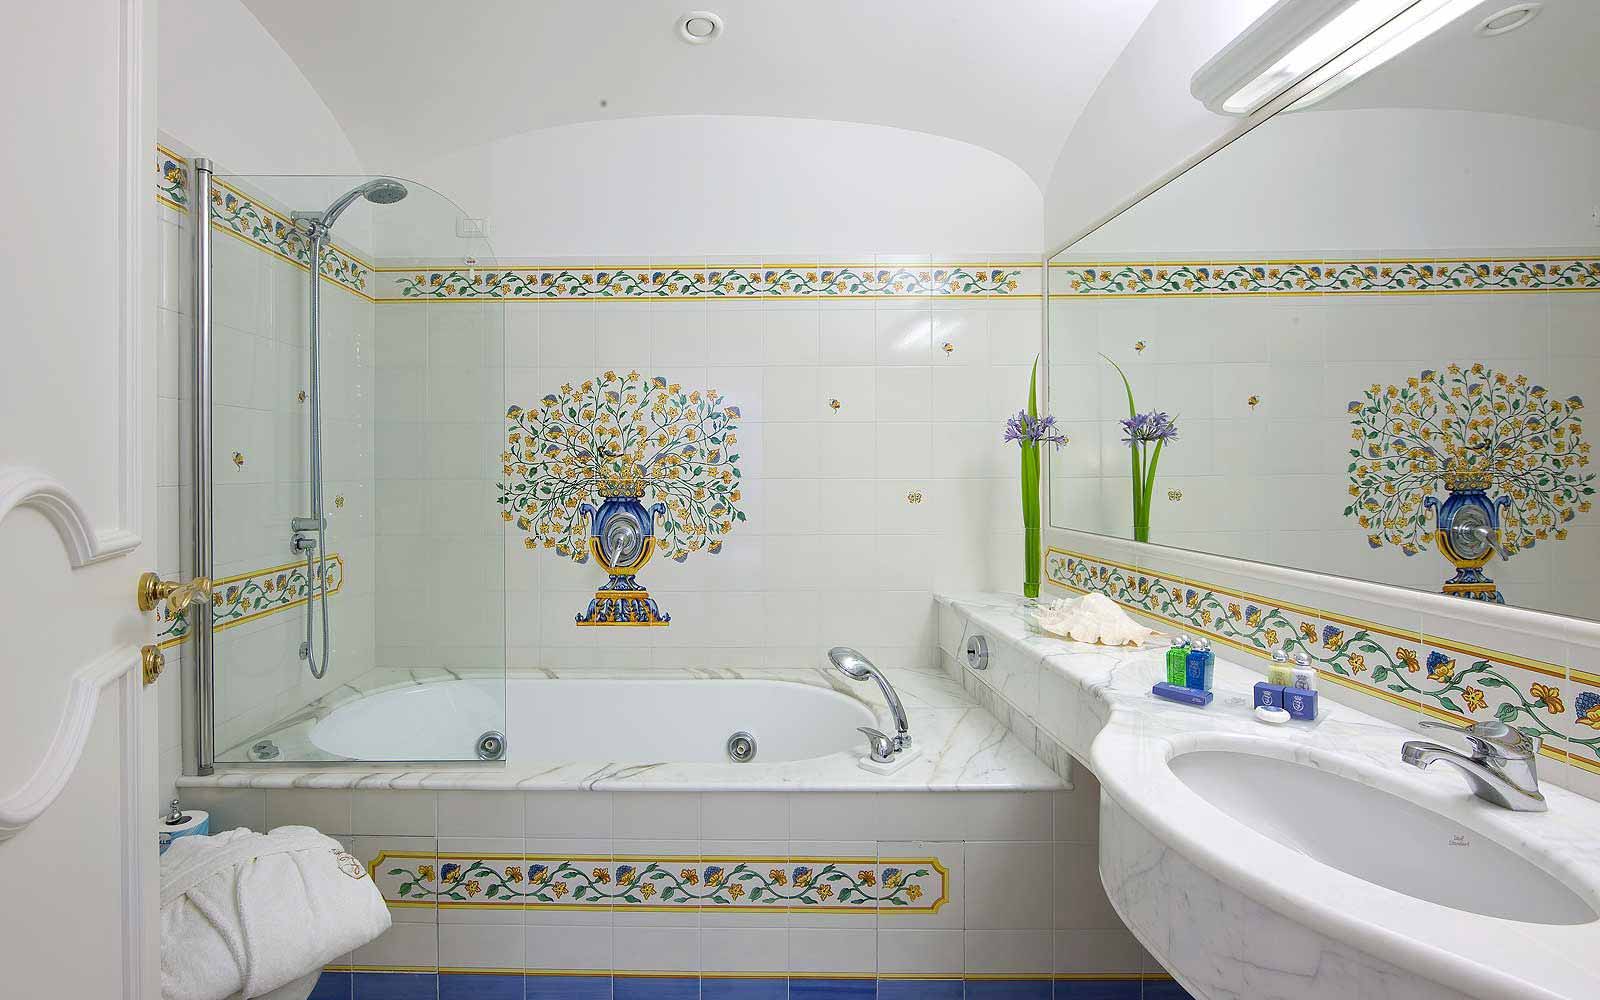 A bathroom at the Grand Hotel La Favorita